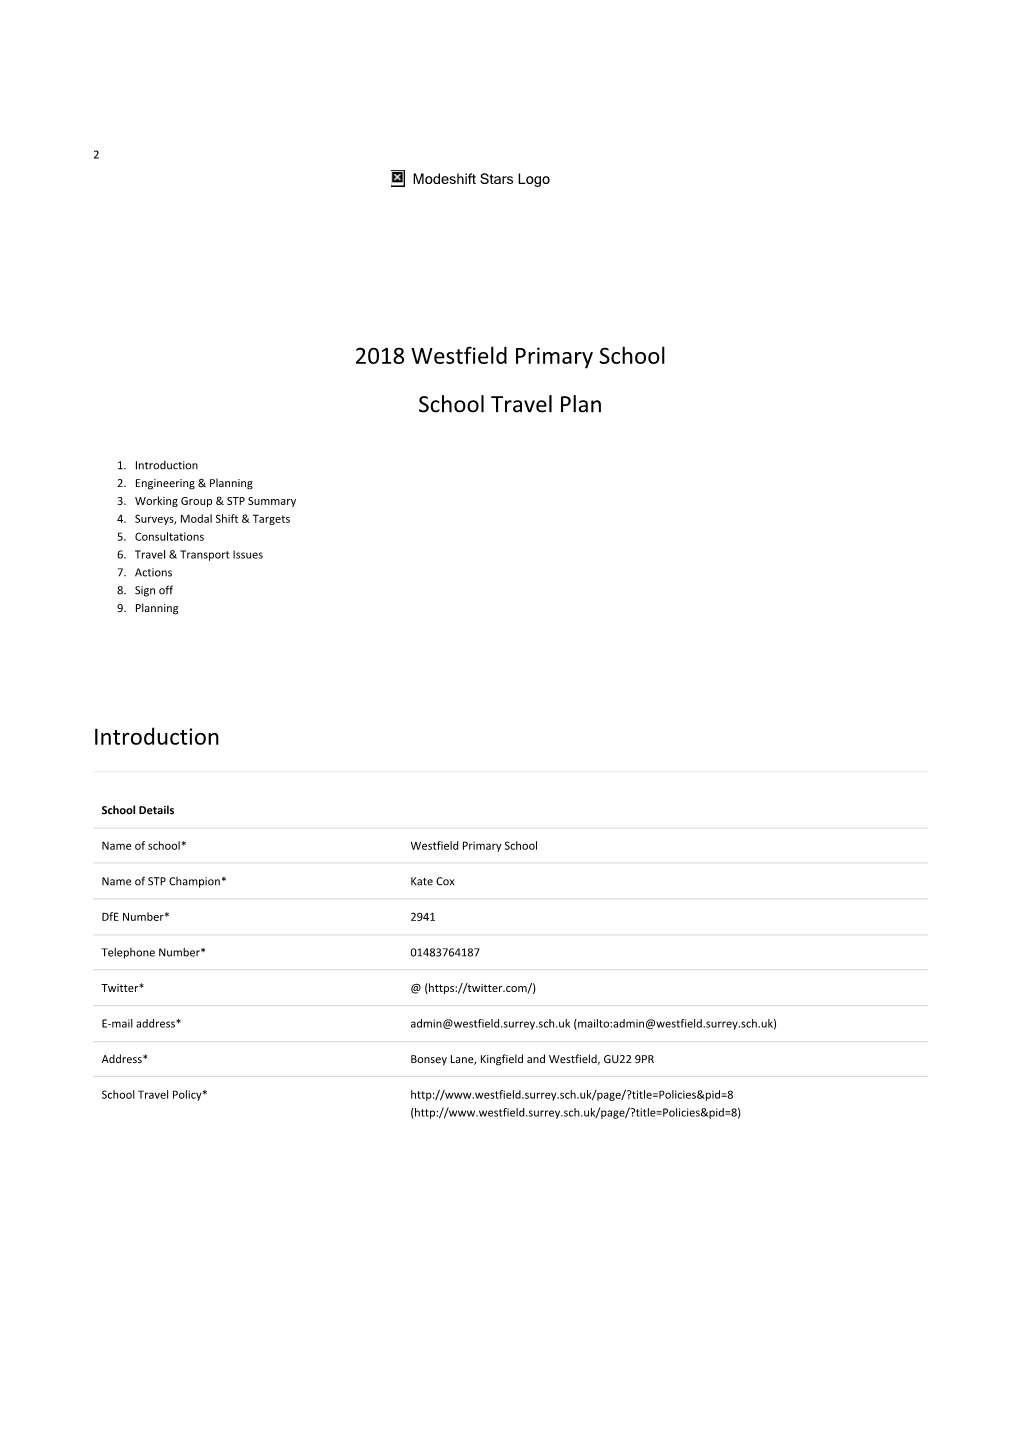 2018 Westfield Primary School School Travel Plan